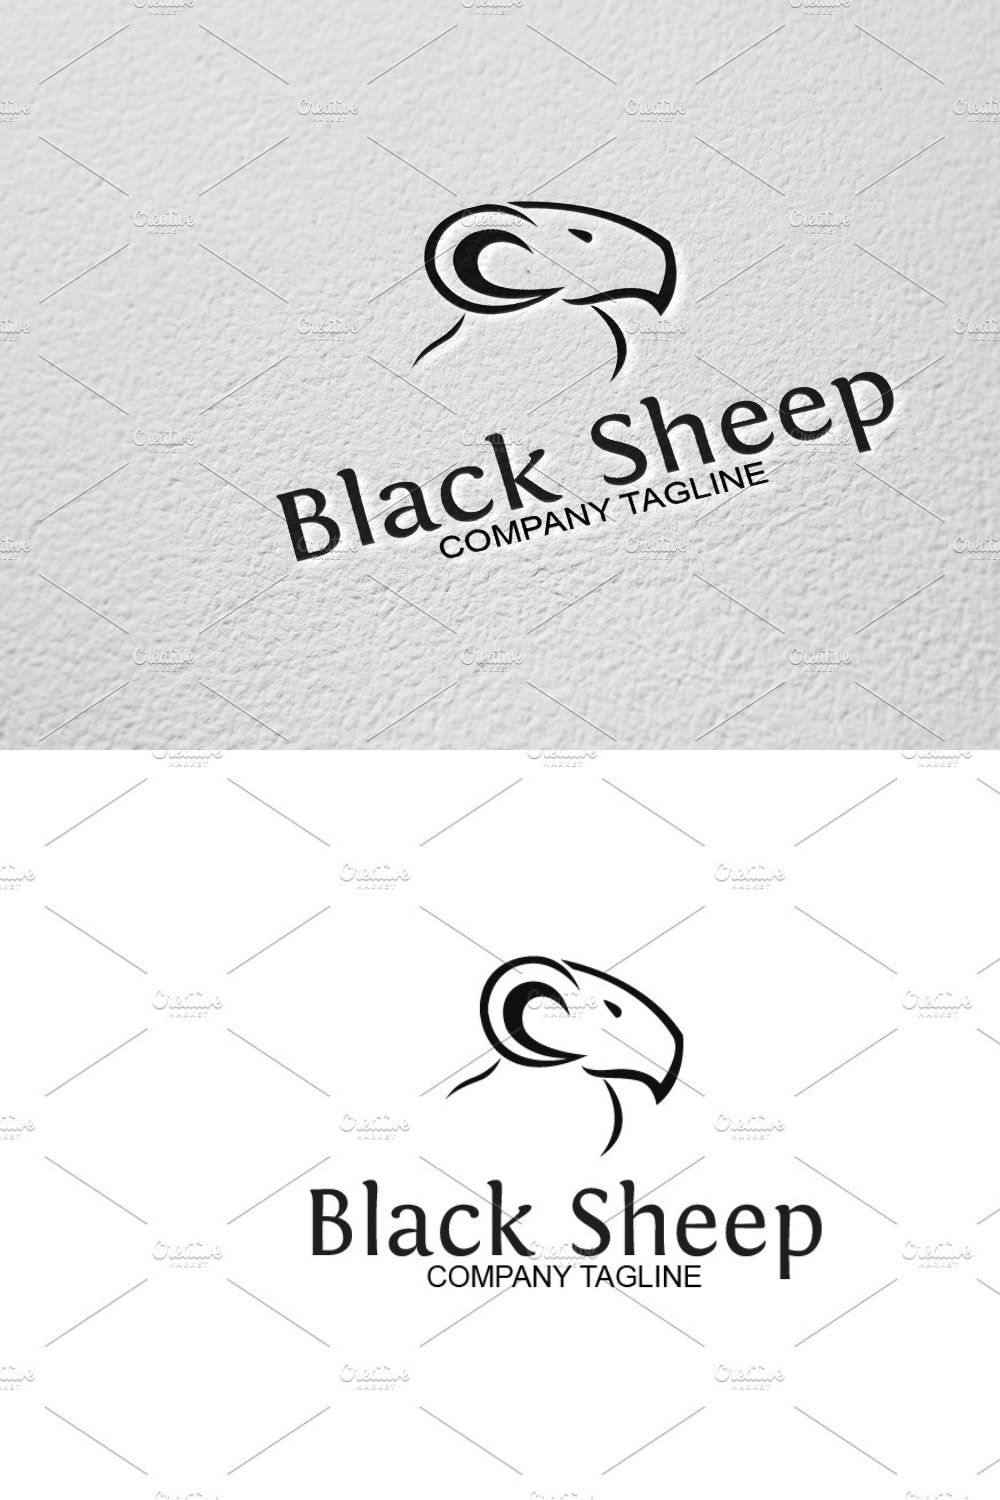 Black Sheep pinterest preview image.